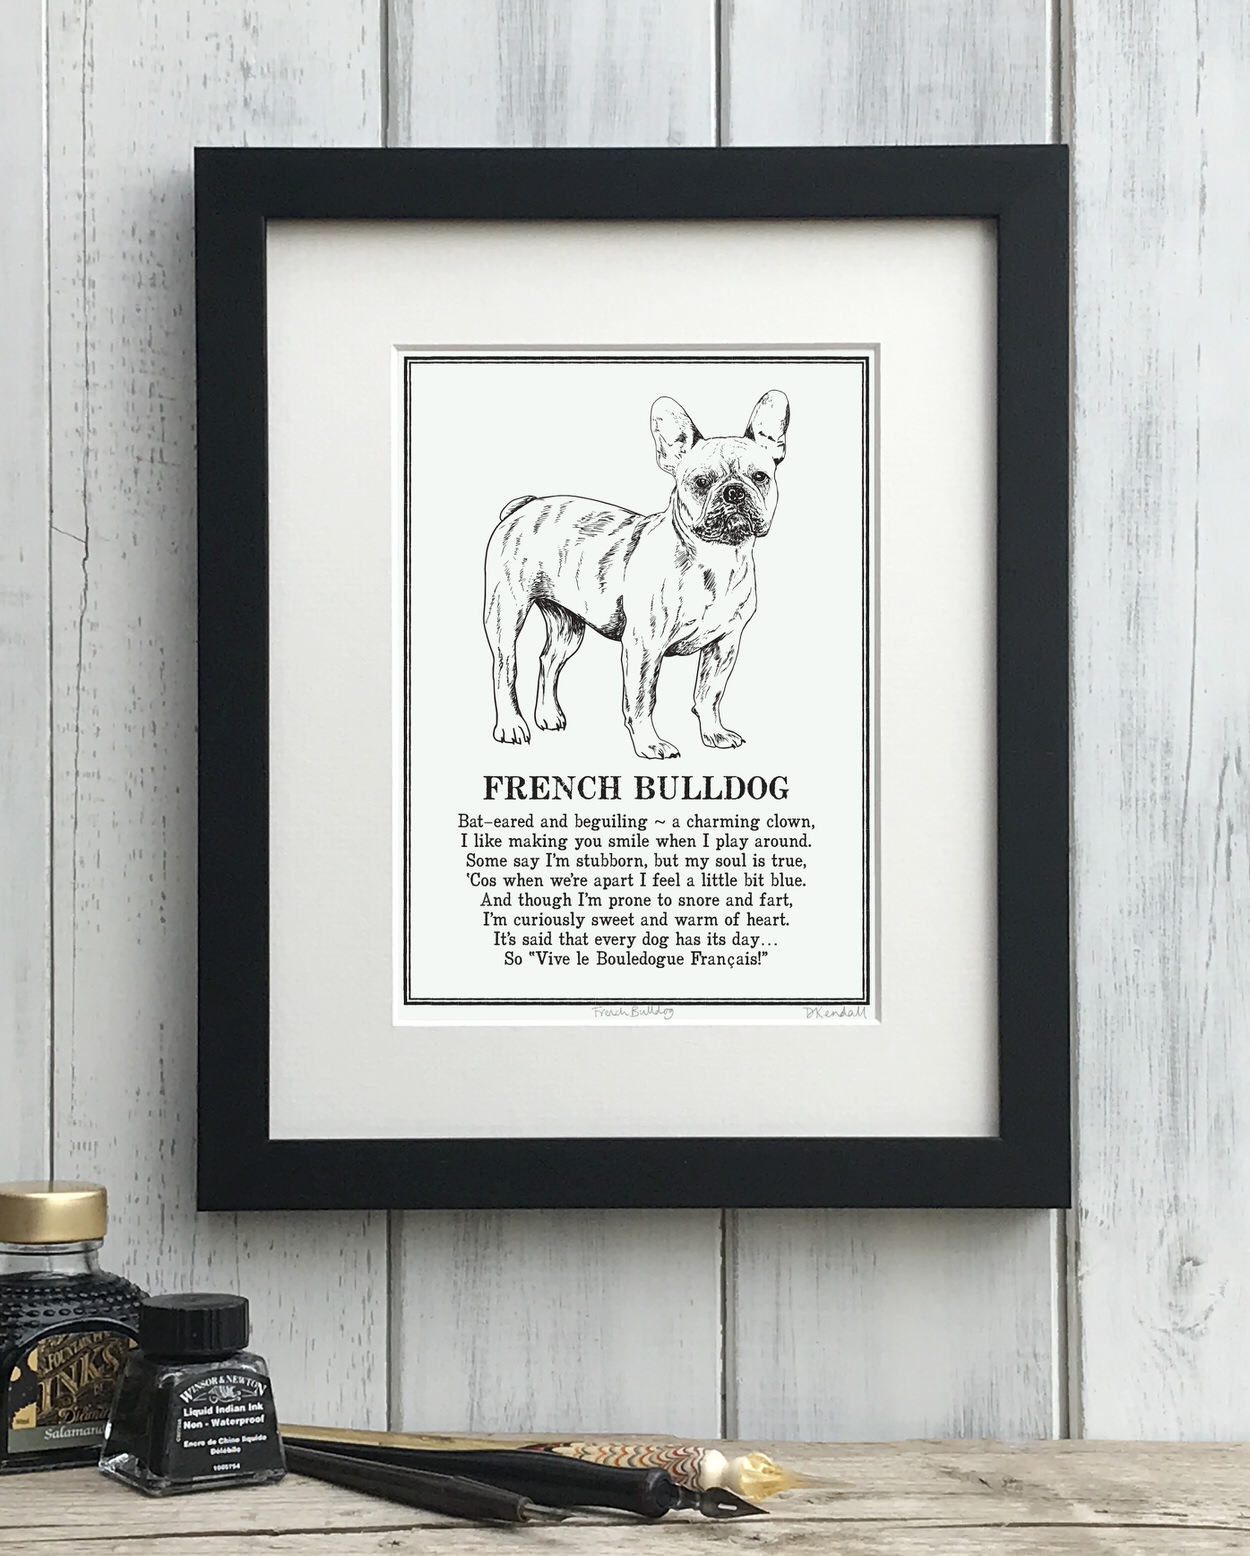 French Bulldog Illustrated Poem Print | The Enlightened Hound